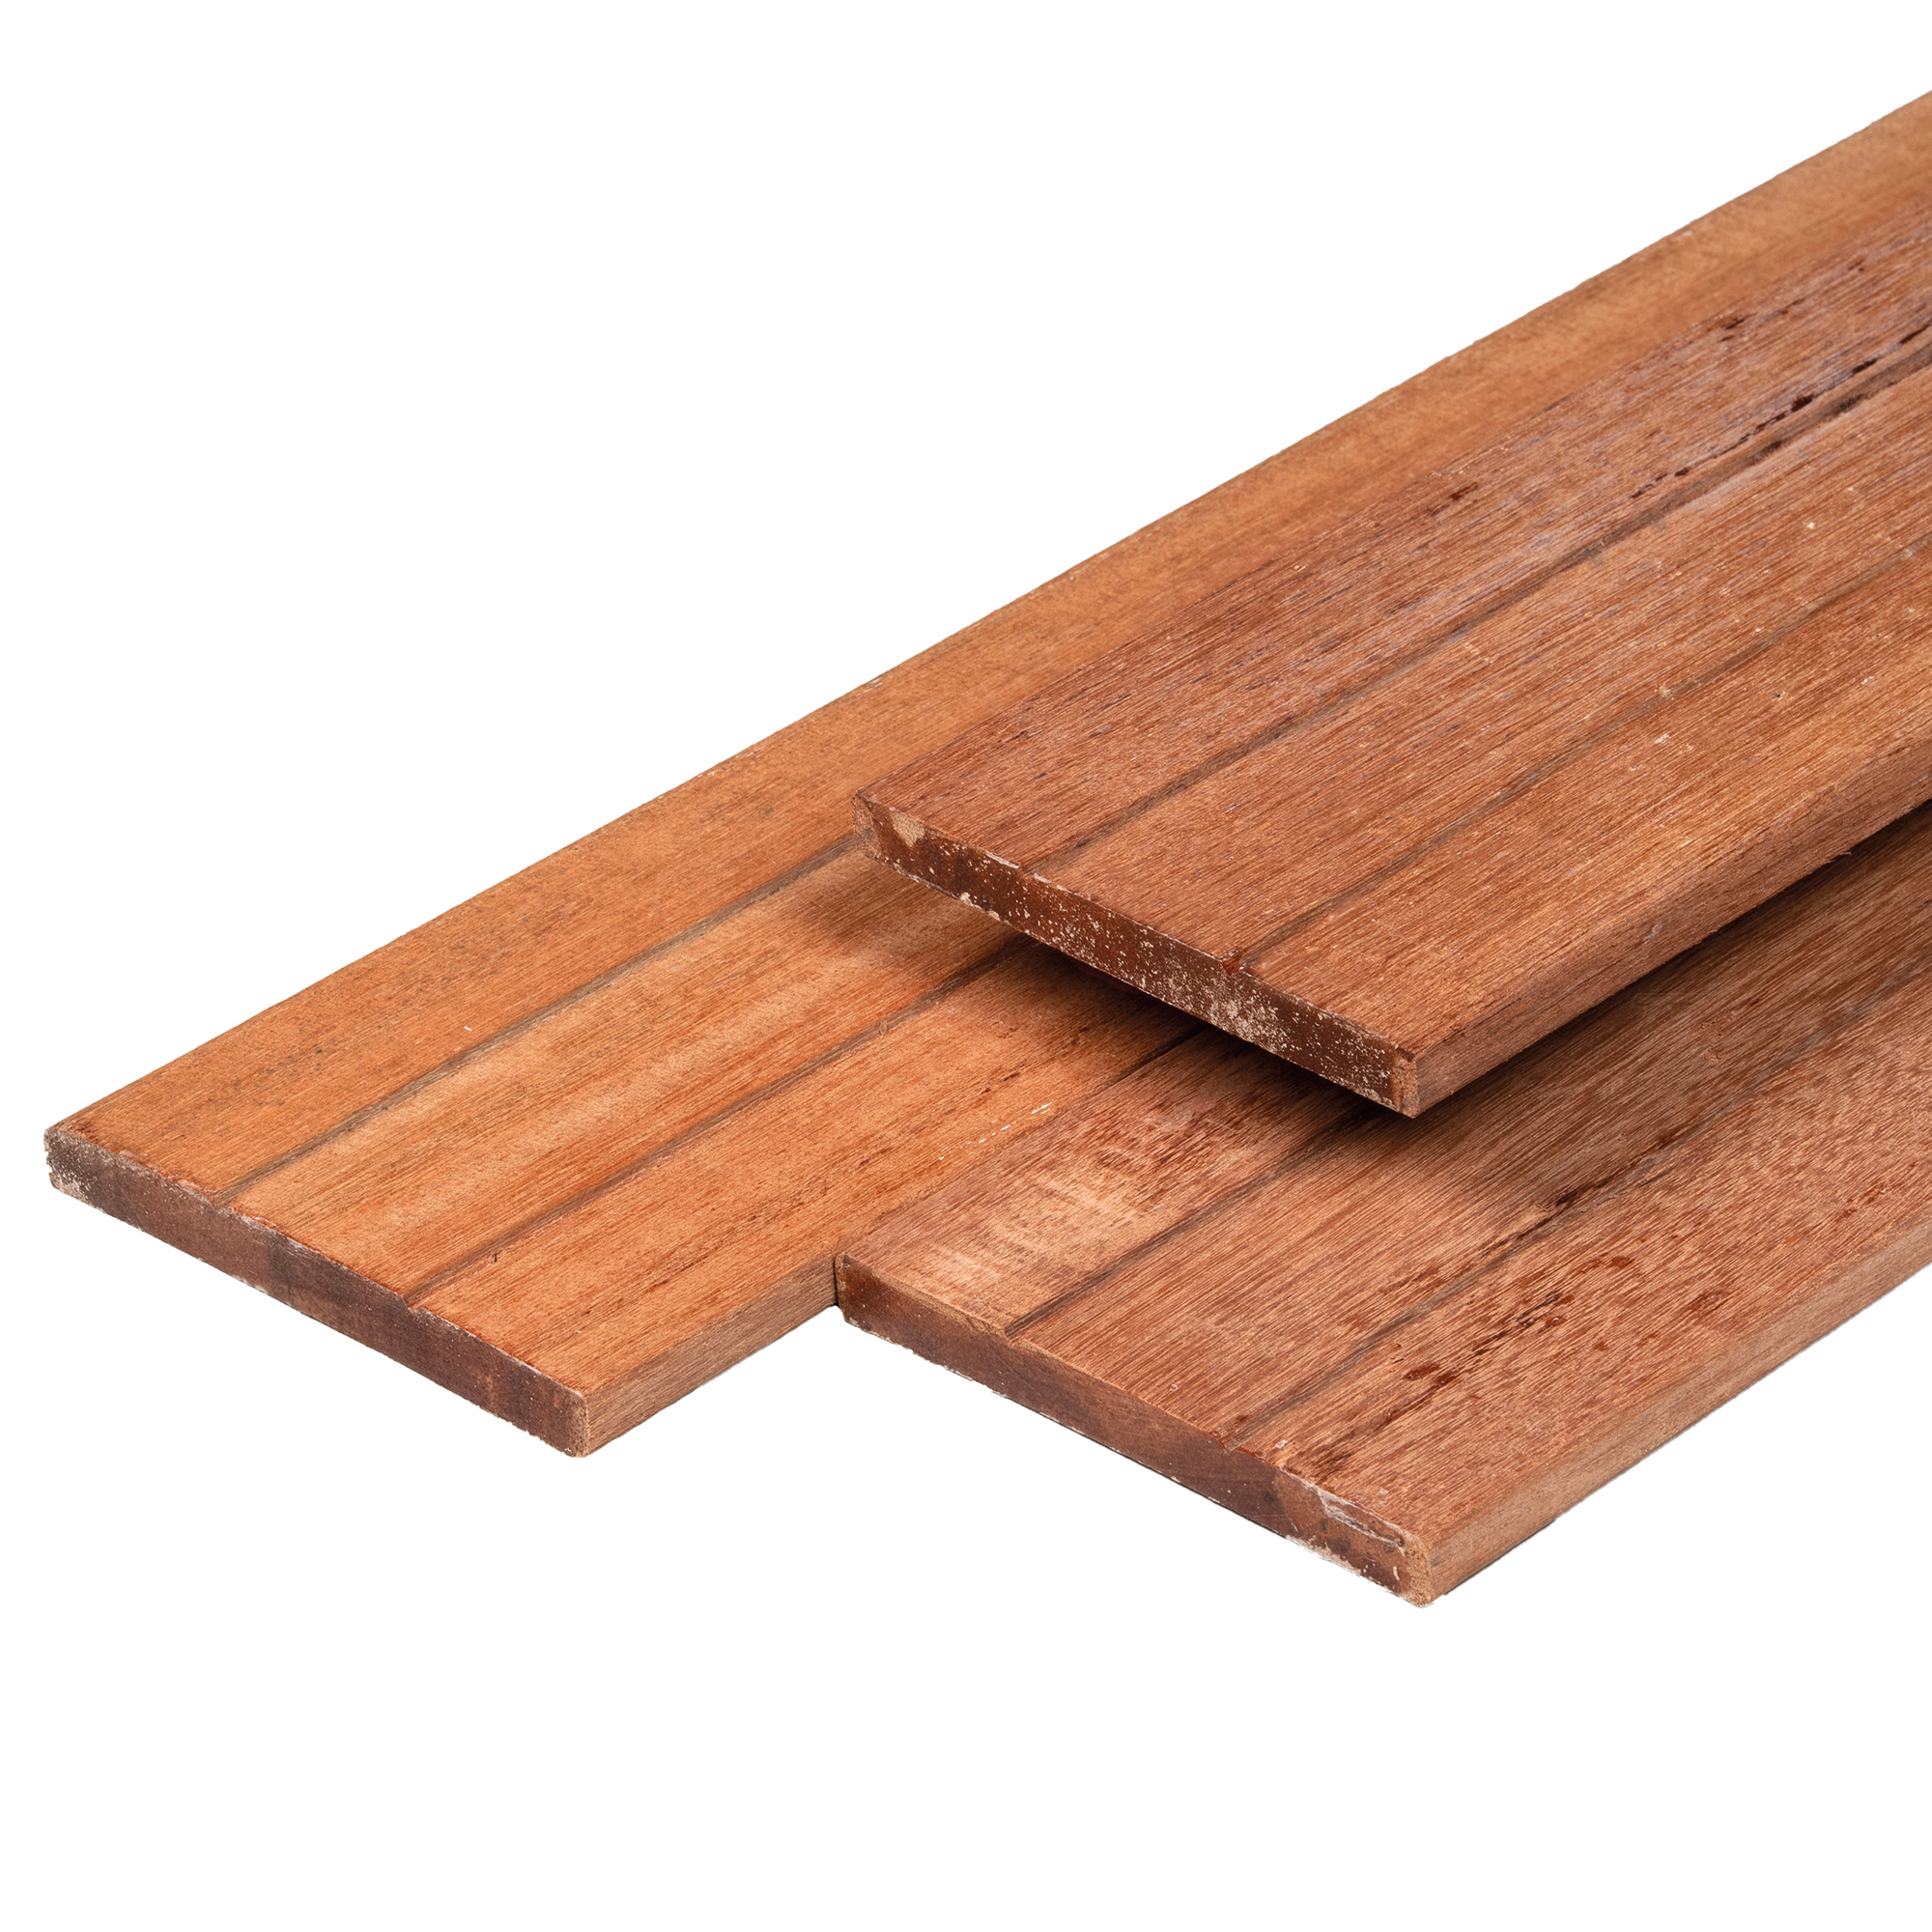 Plank hardhout 1.4x14.0x180cm